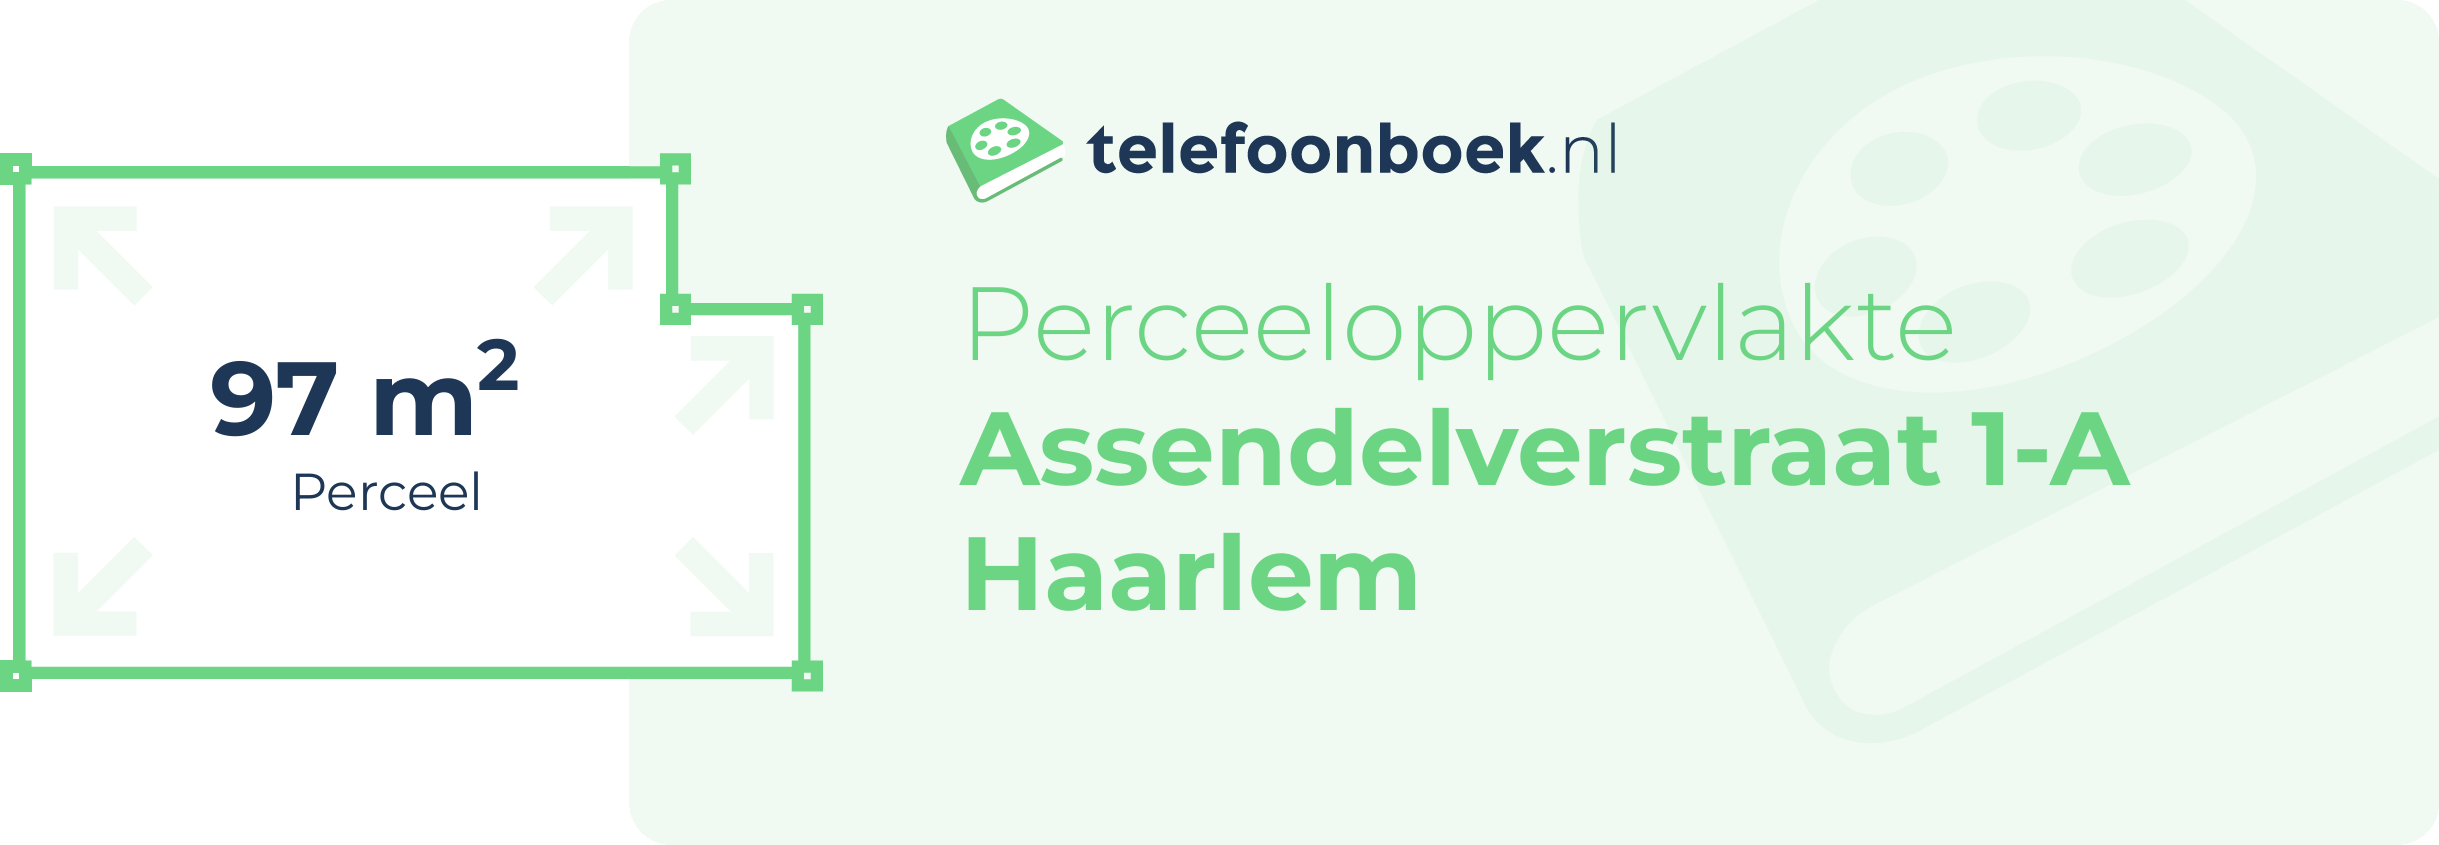 Perceeloppervlakte Assendelverstraat 1-A Haarlem